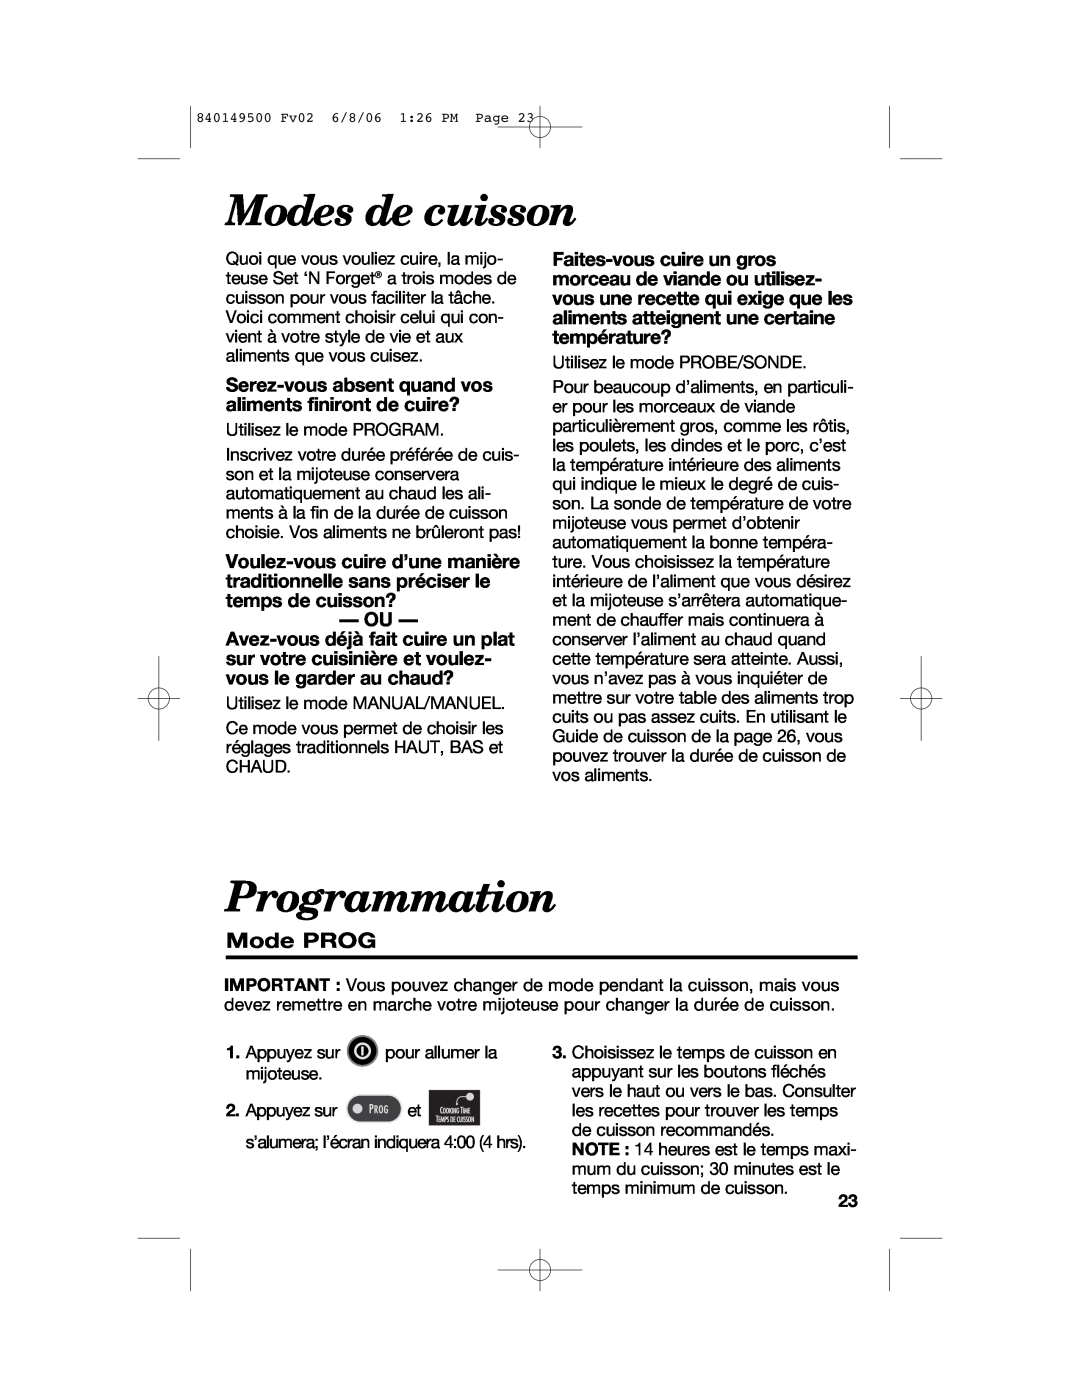 Proctor-Silex 840149500 manual Modes de cuisson, Programmation, Mode PROG 